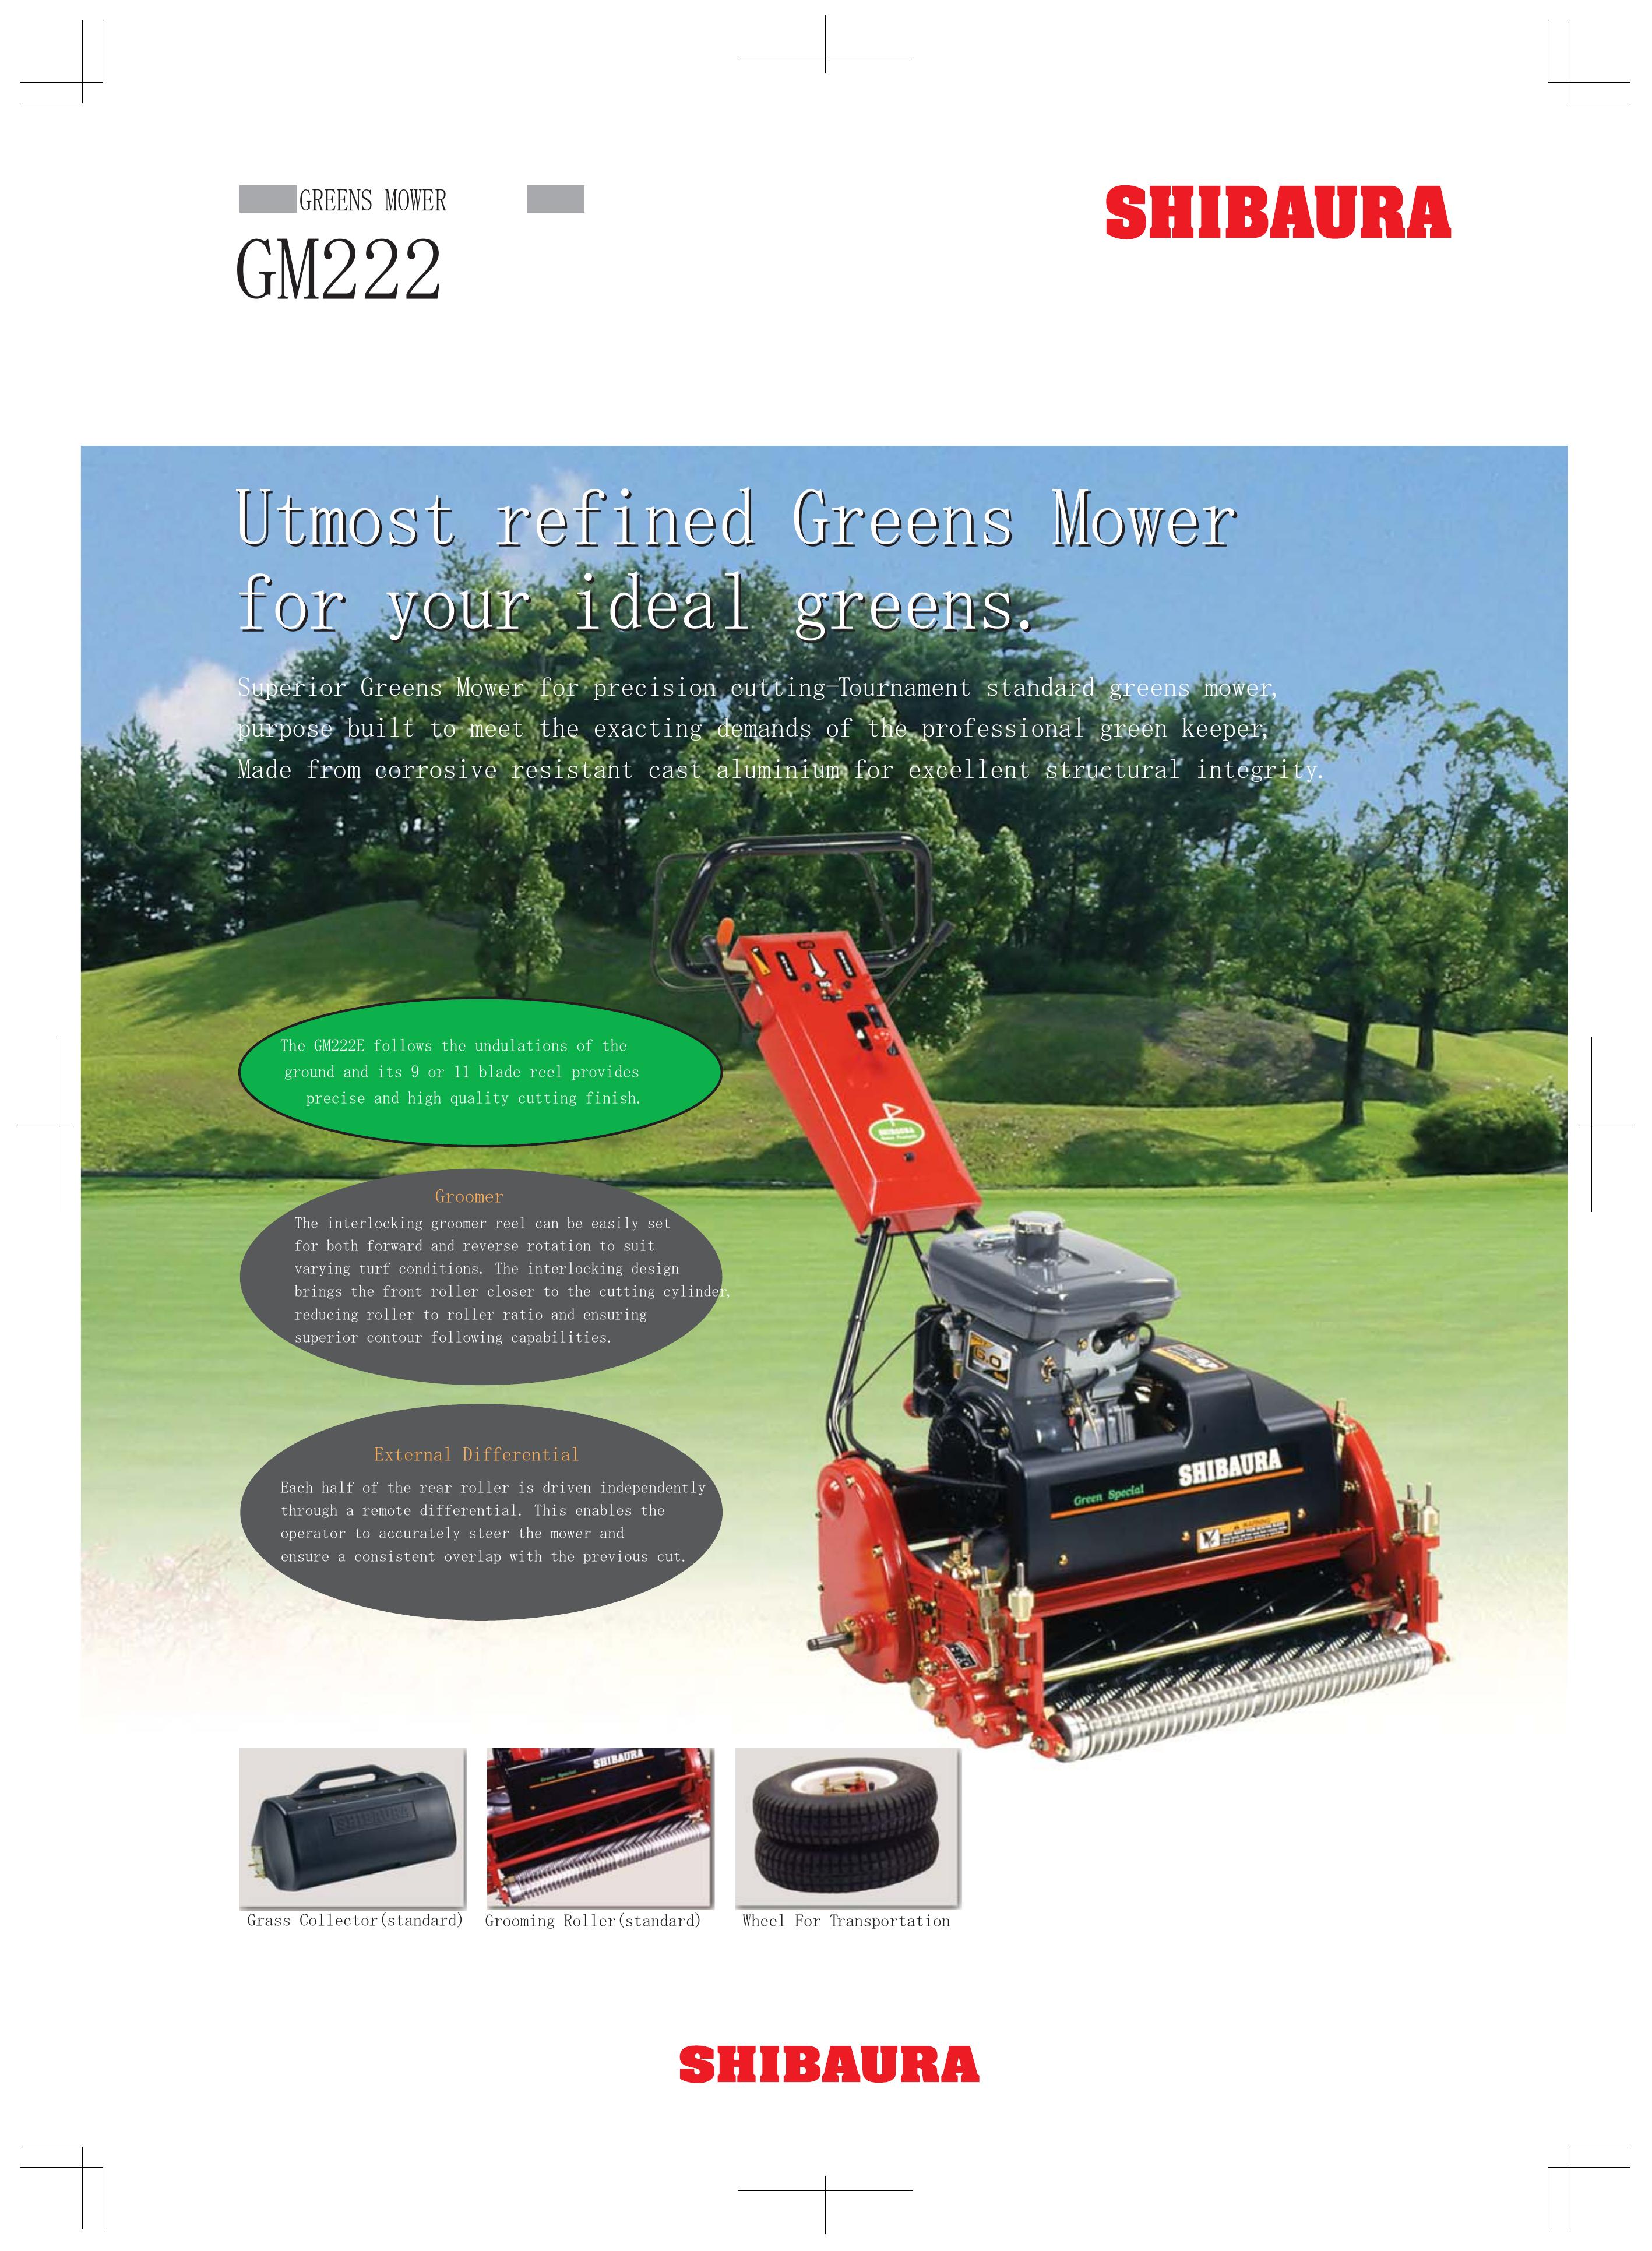 Shibaura GM222 Lawn Mower User Manual